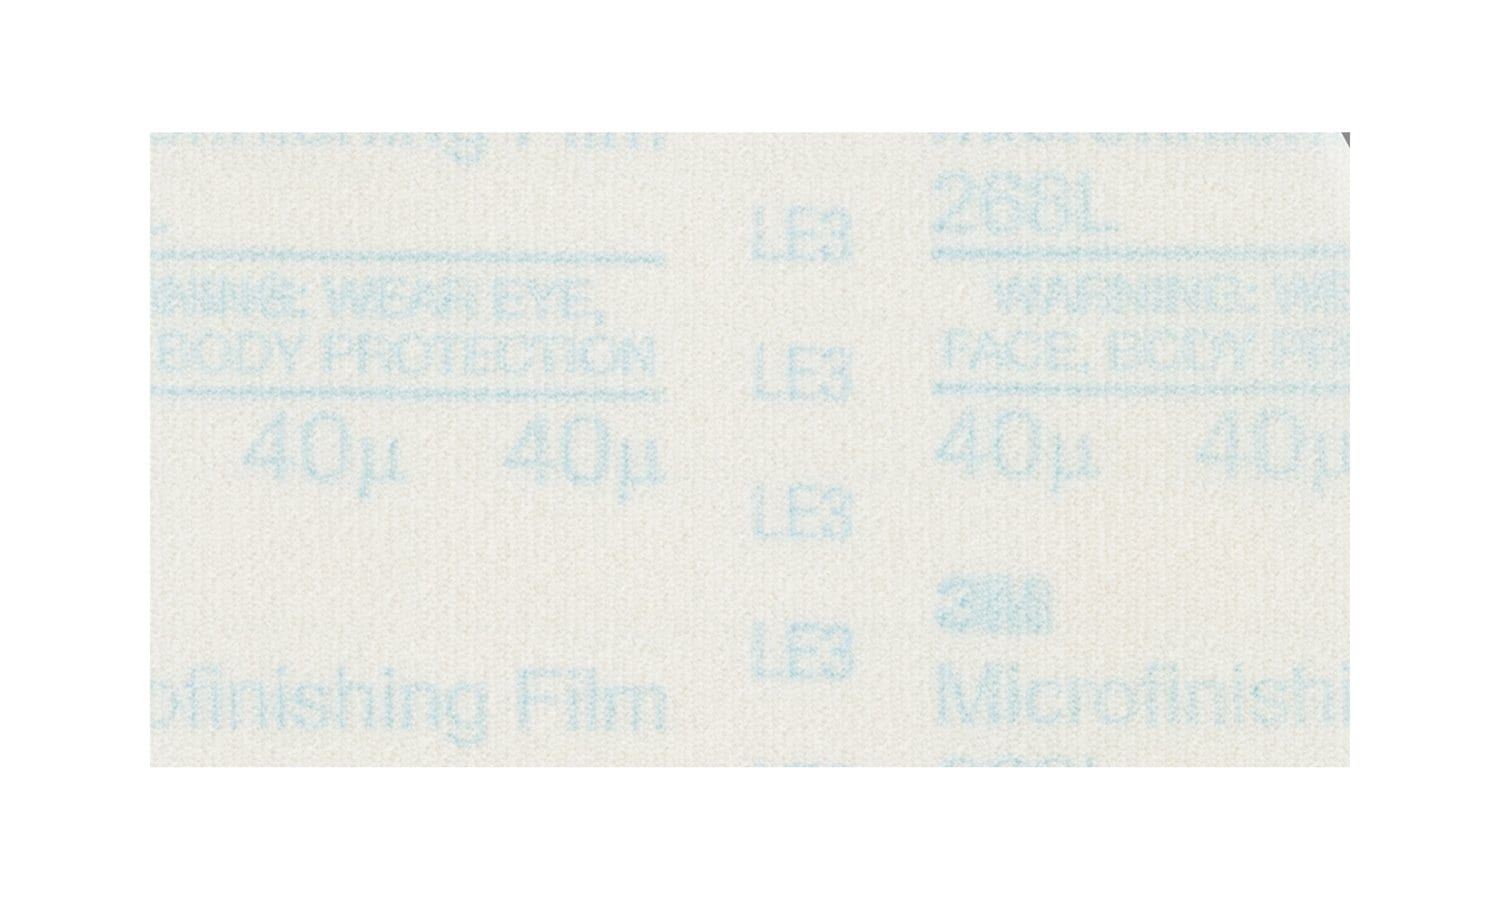 7010308036 - 3M Microfinishing PSA Film Type D Sheet 268L, 12 in x 14 in 60 Mic,
25/Bag, 100 ea/Case